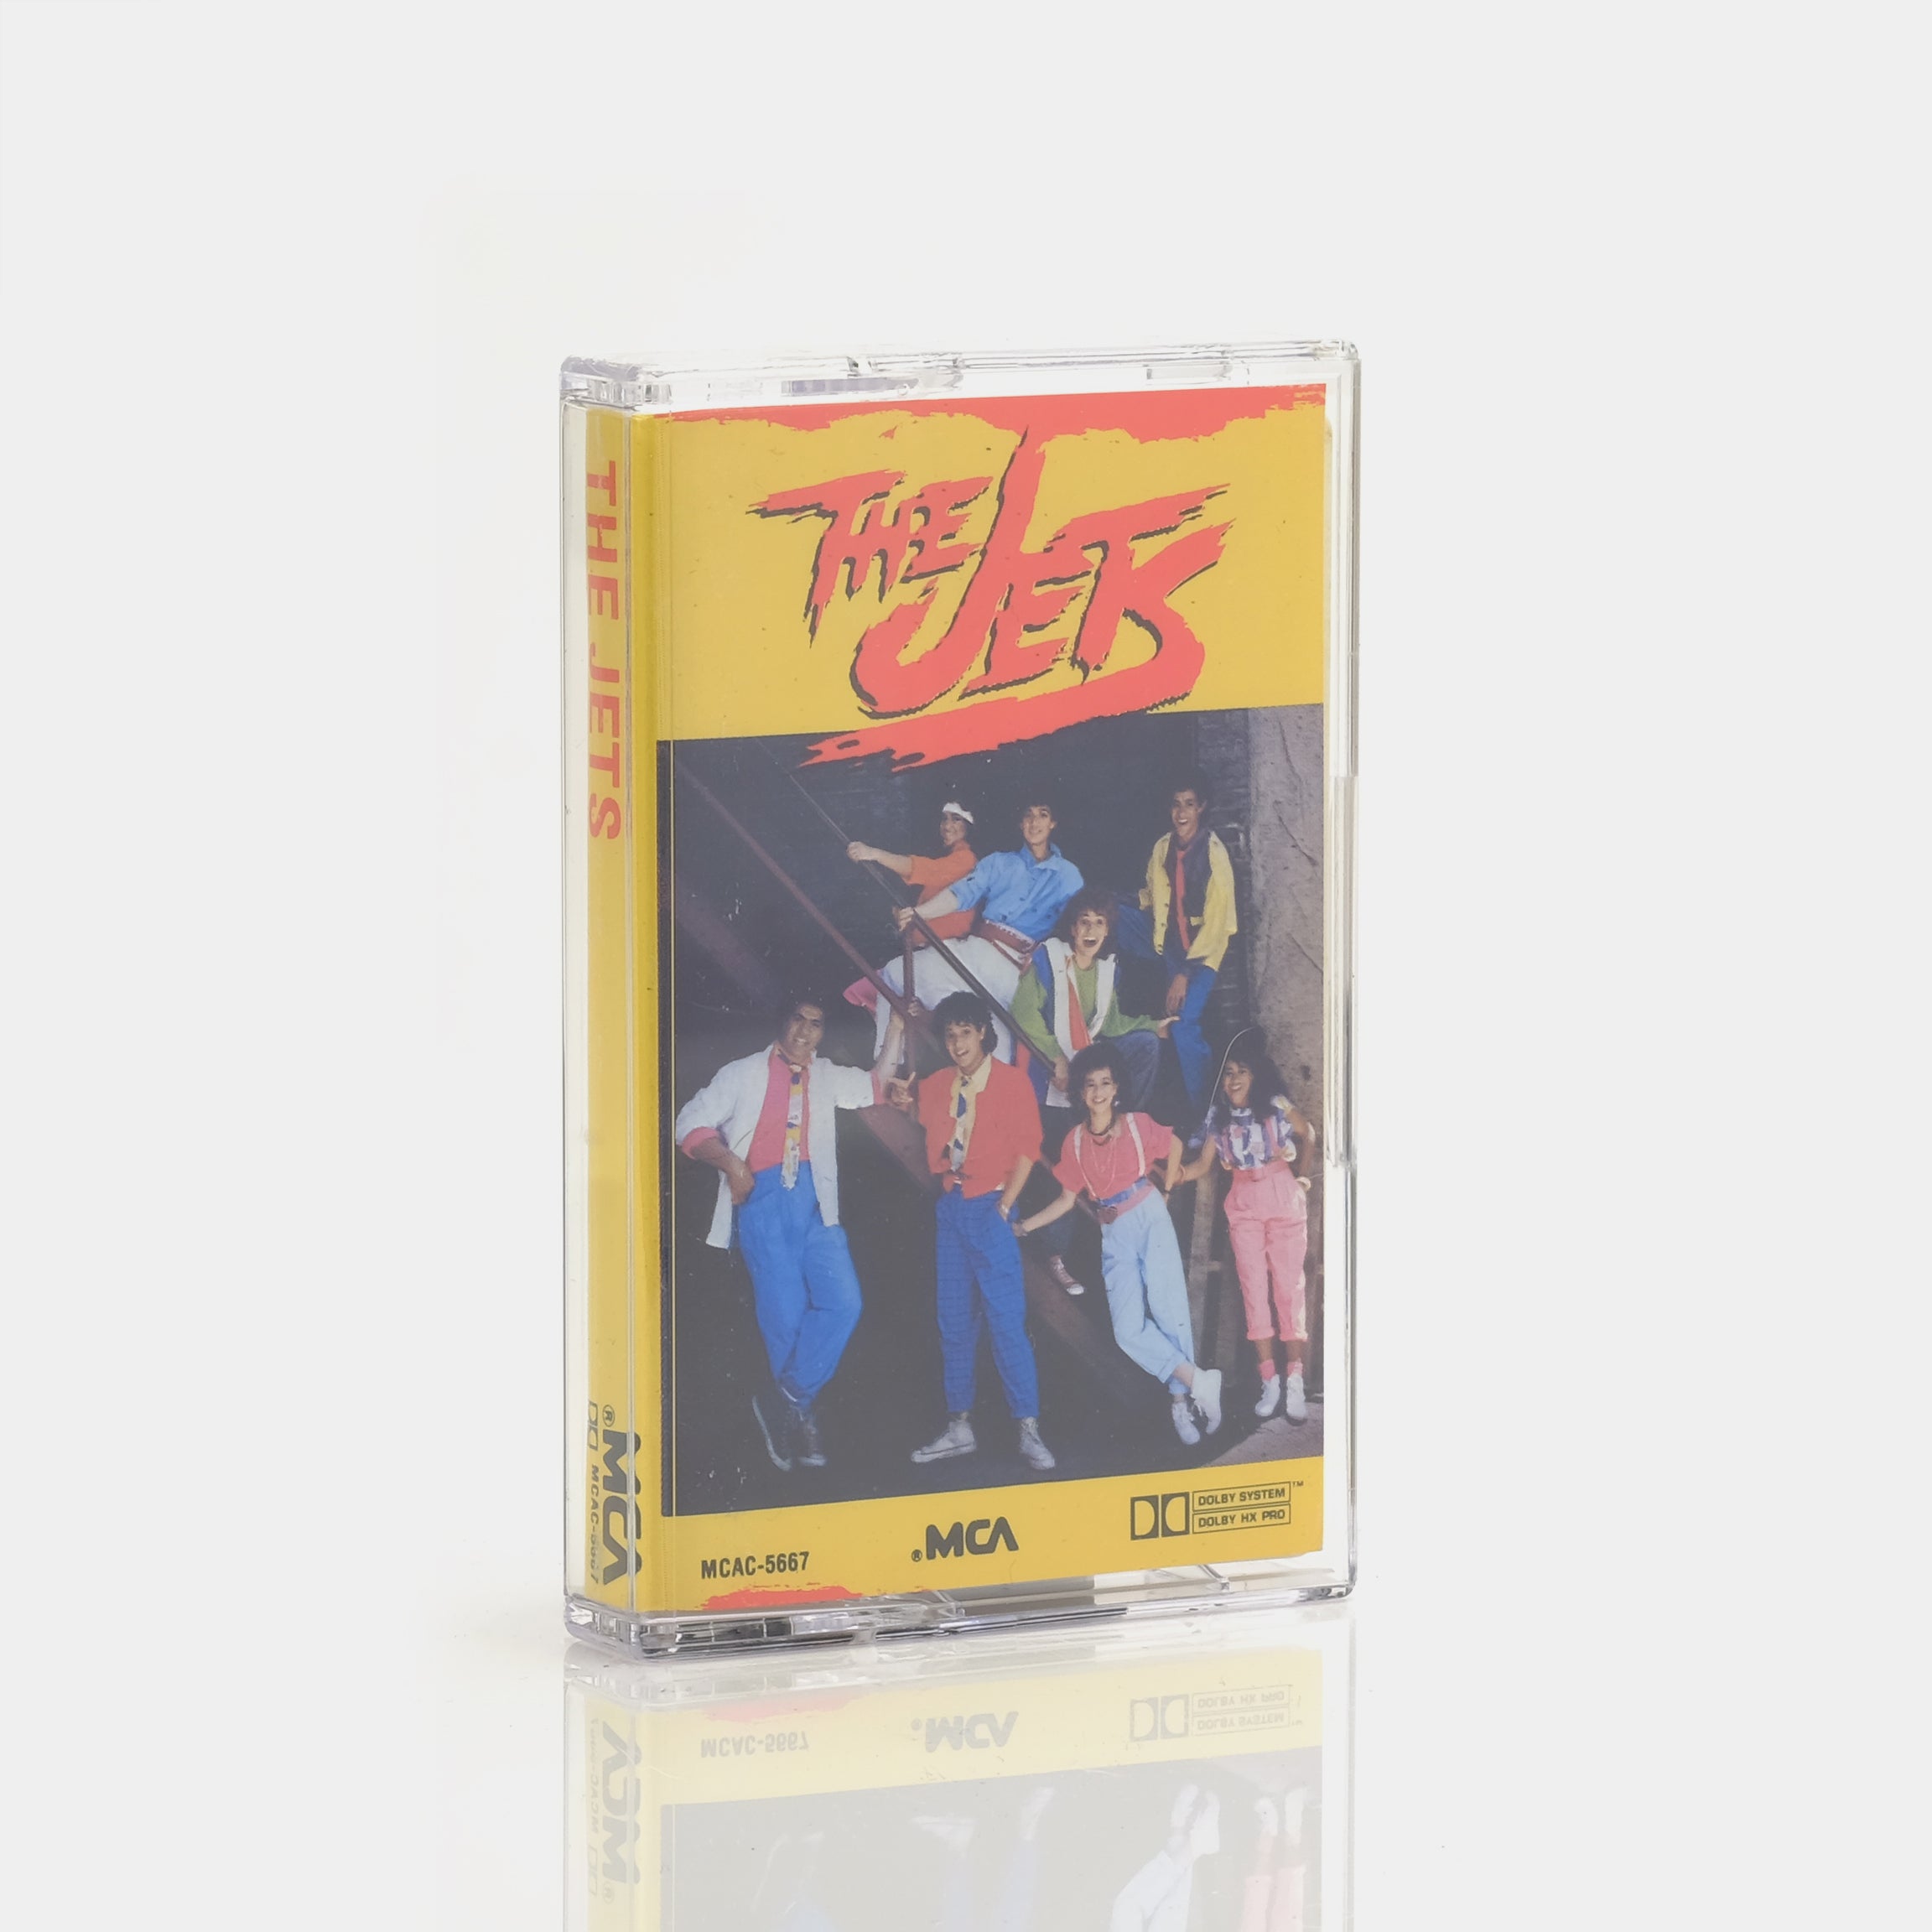 The Jets - The Jets Cassette Tape